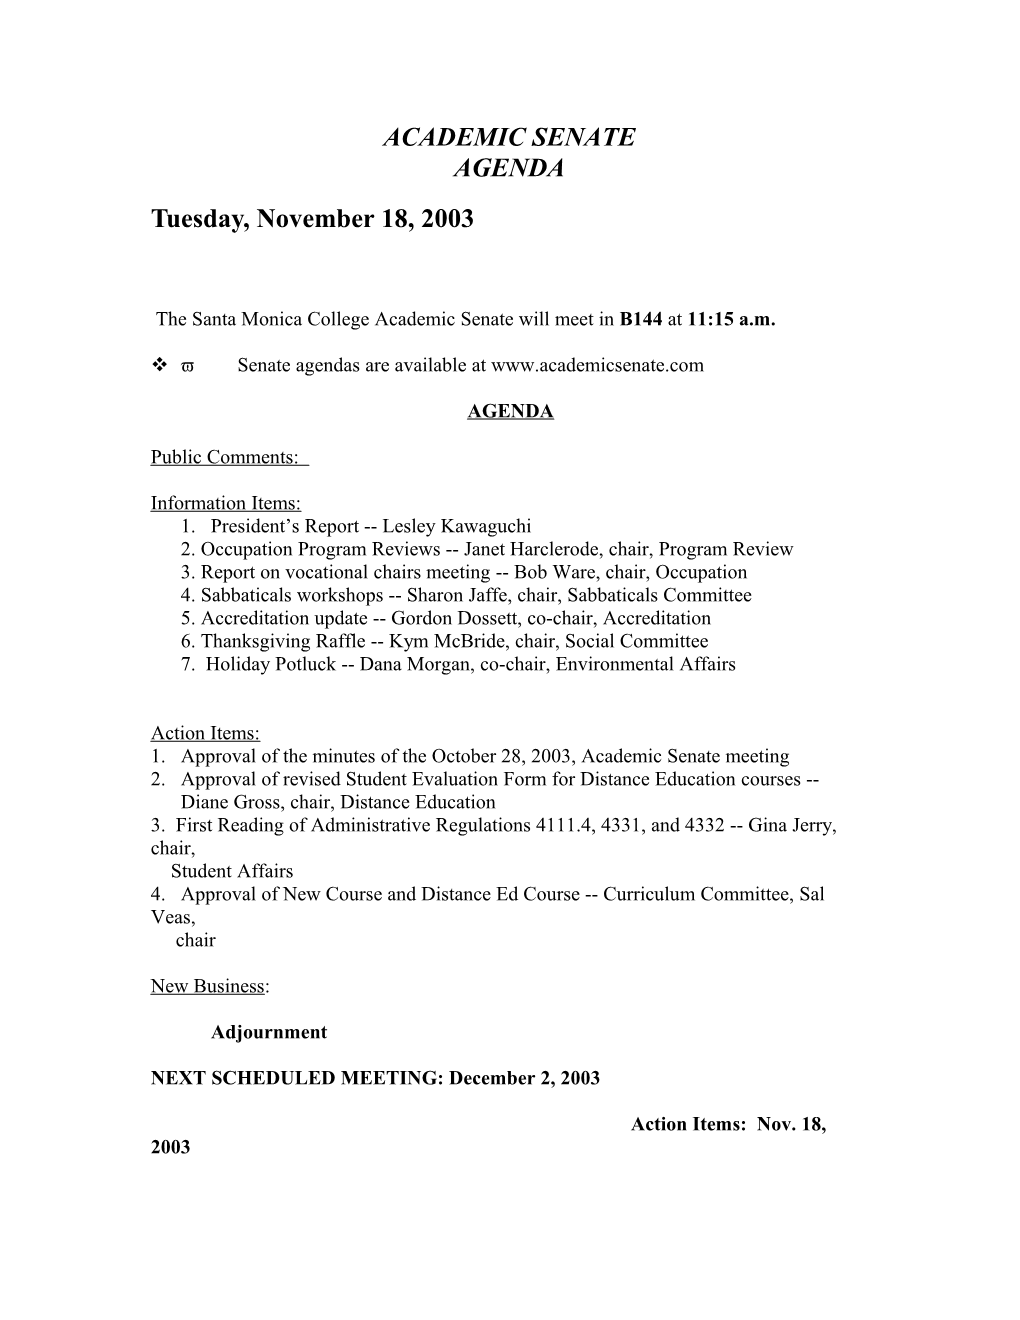 The Santa Monica College Academic Senate Will Meet in B144 at 11:15 A.M